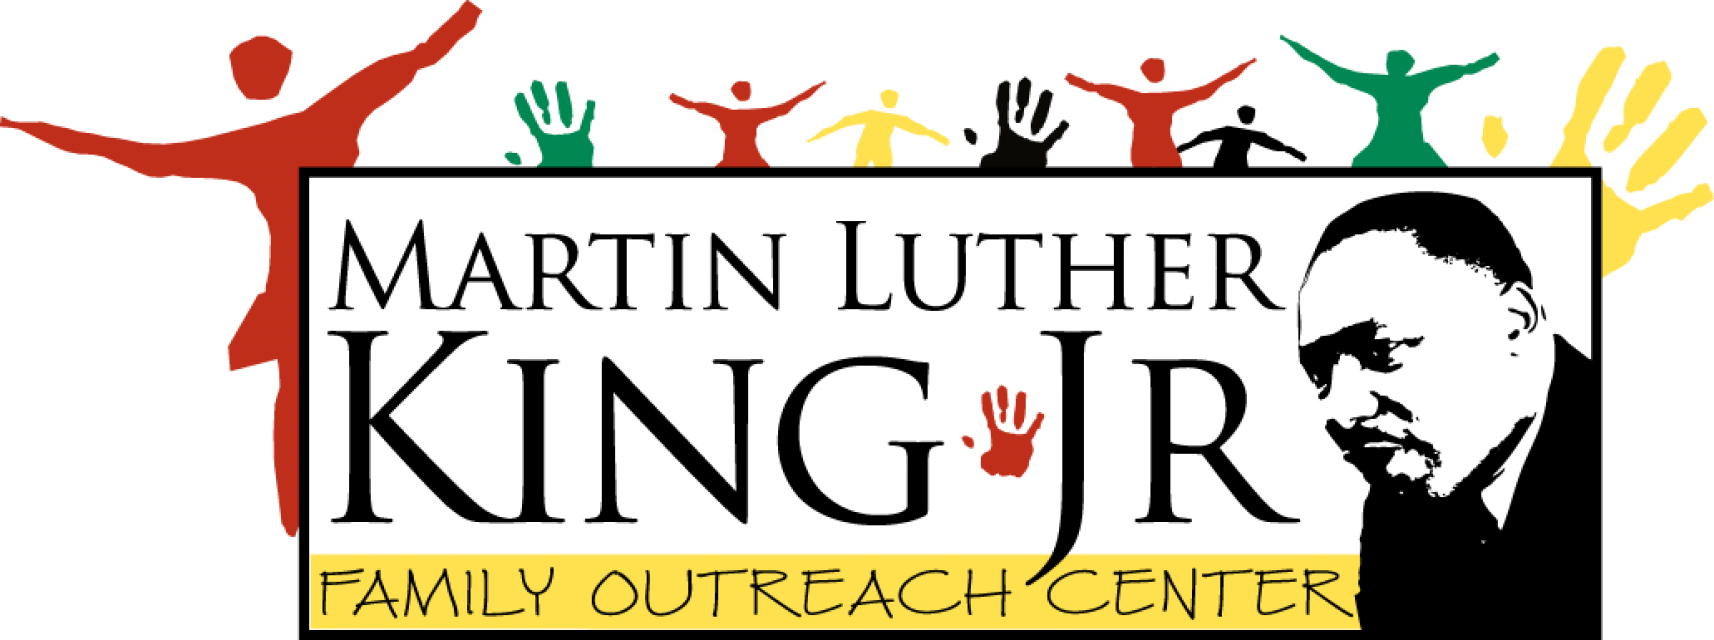 Dr. Martin Luther King Jr. Community Center